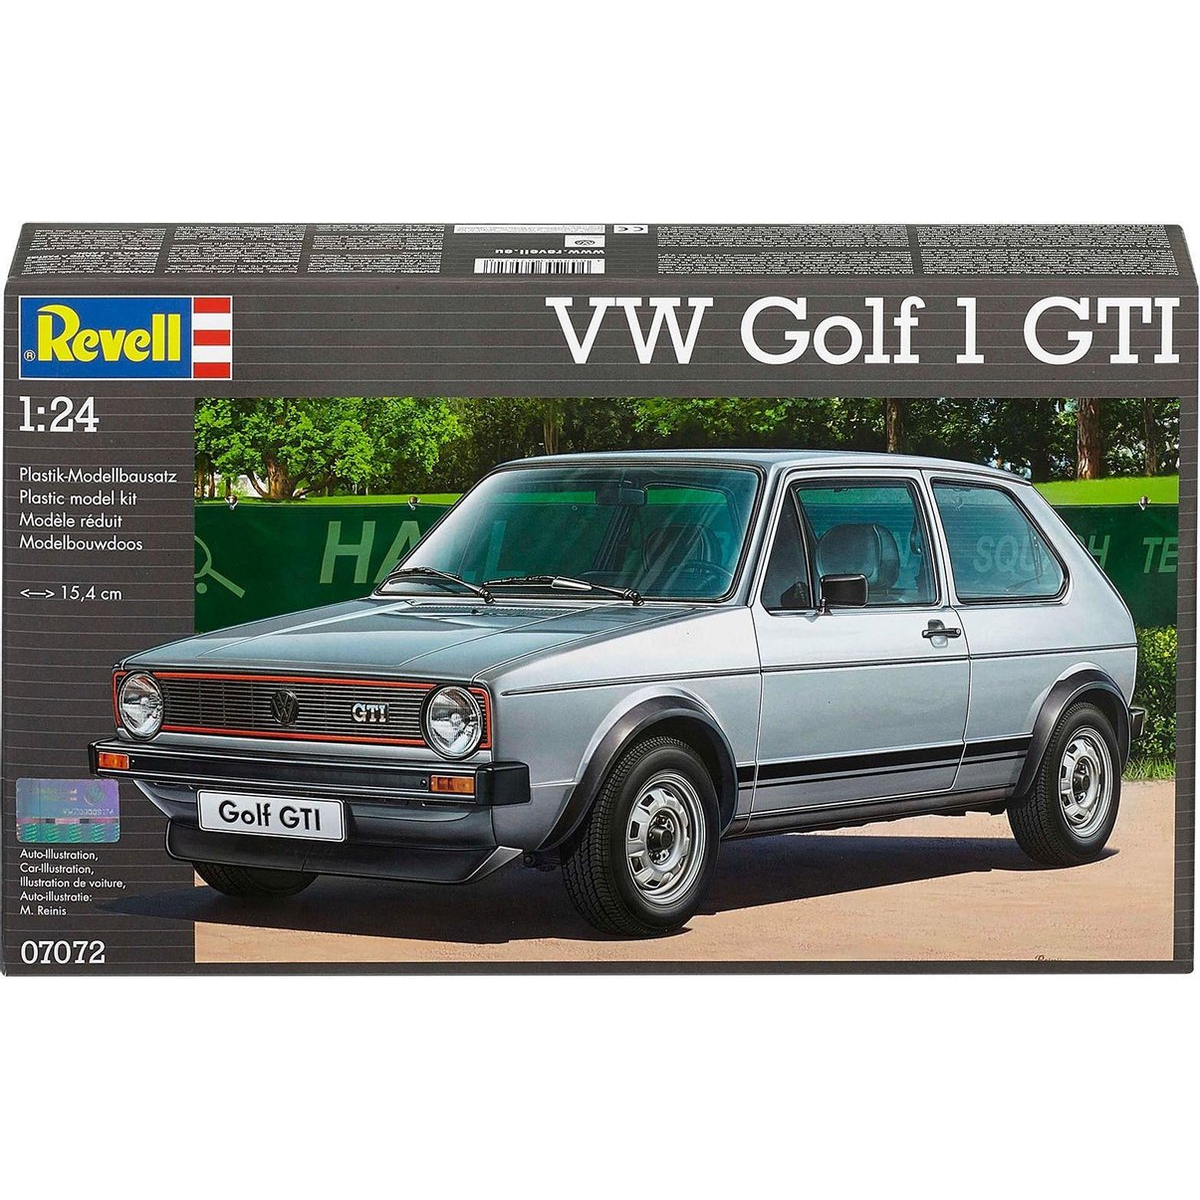 Volkswagen Golf 1 GTI Revell